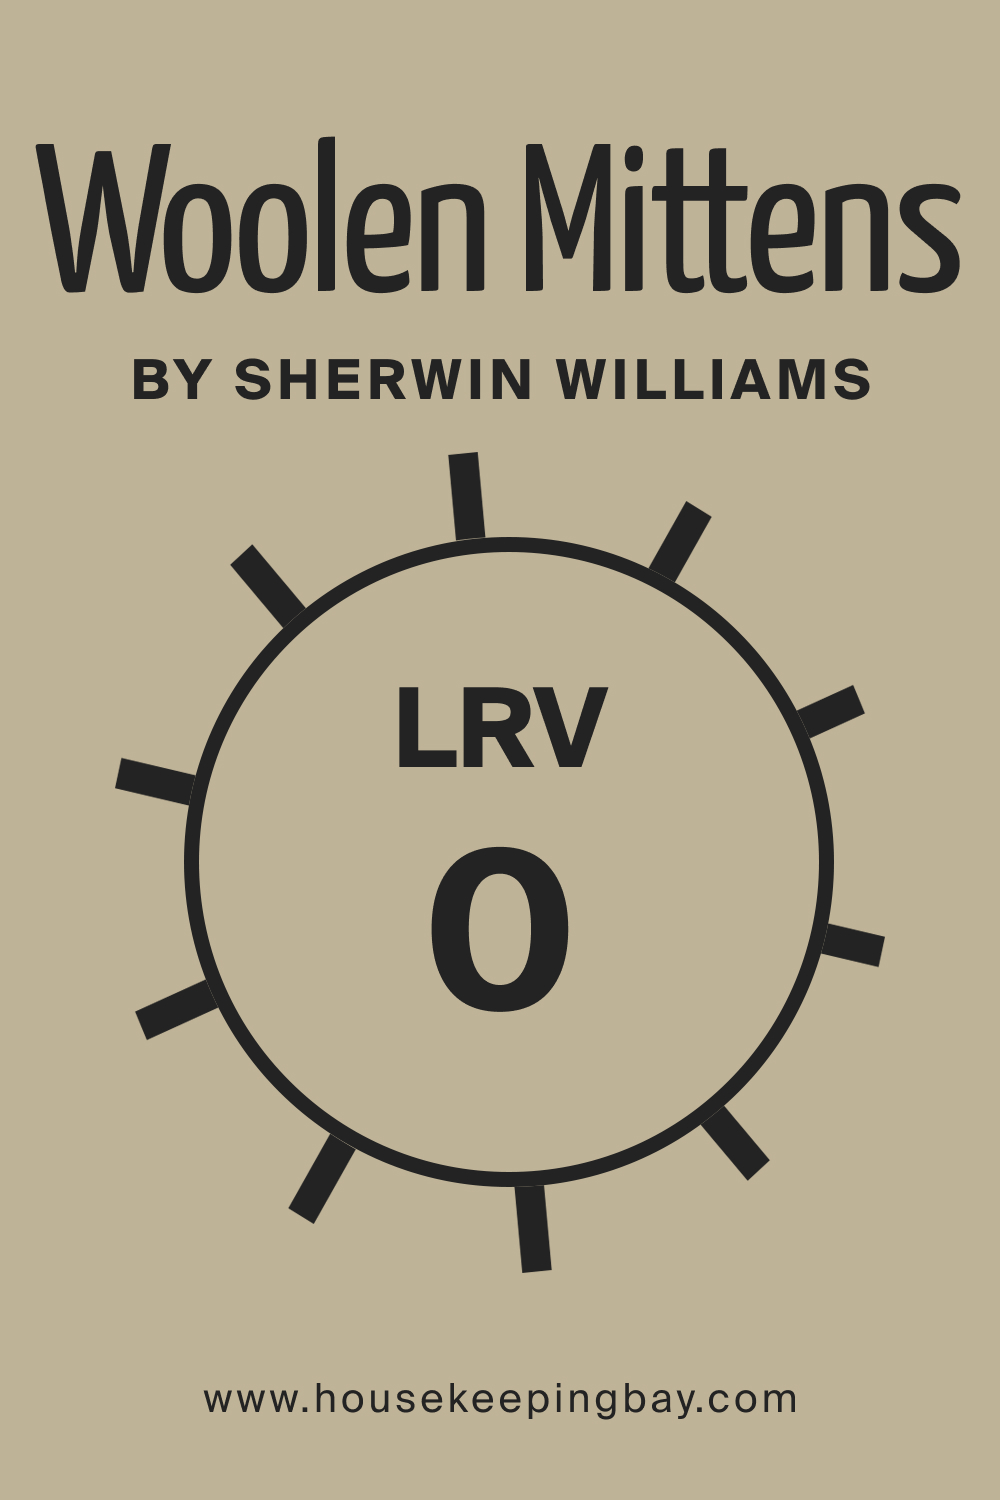 SW 9526 Woolen Mittens by Sherwin Williams. LRV 0